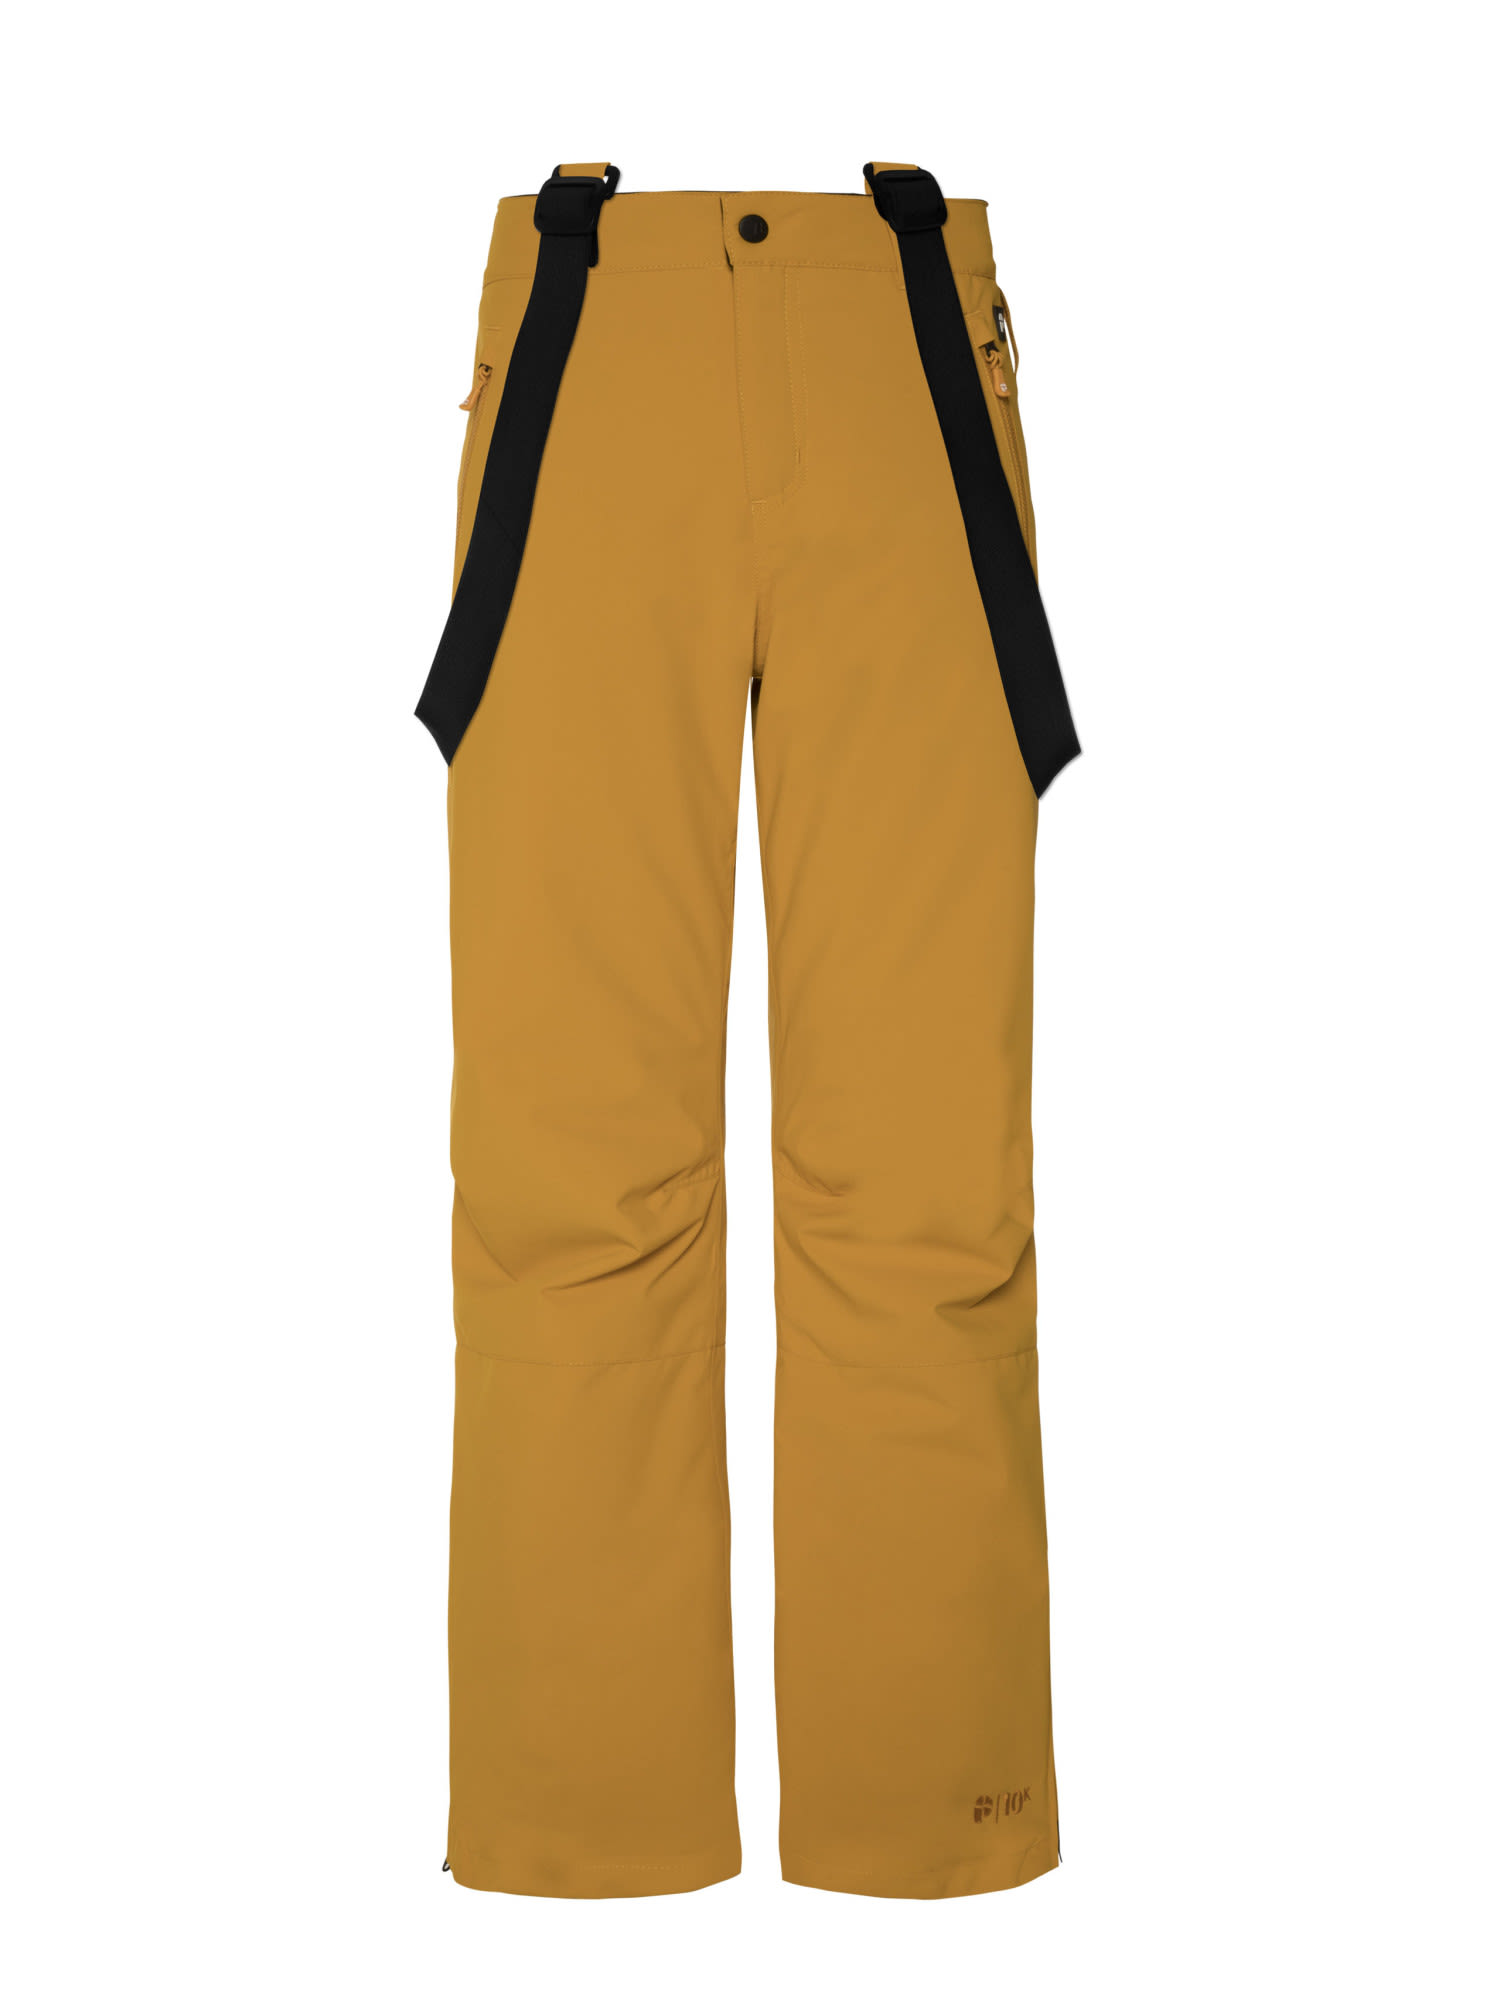 Protest Boys Spiket JR Snowpants Gelb- Male Lange Hosen- Grsse 104 - Farbe Dark Yellow